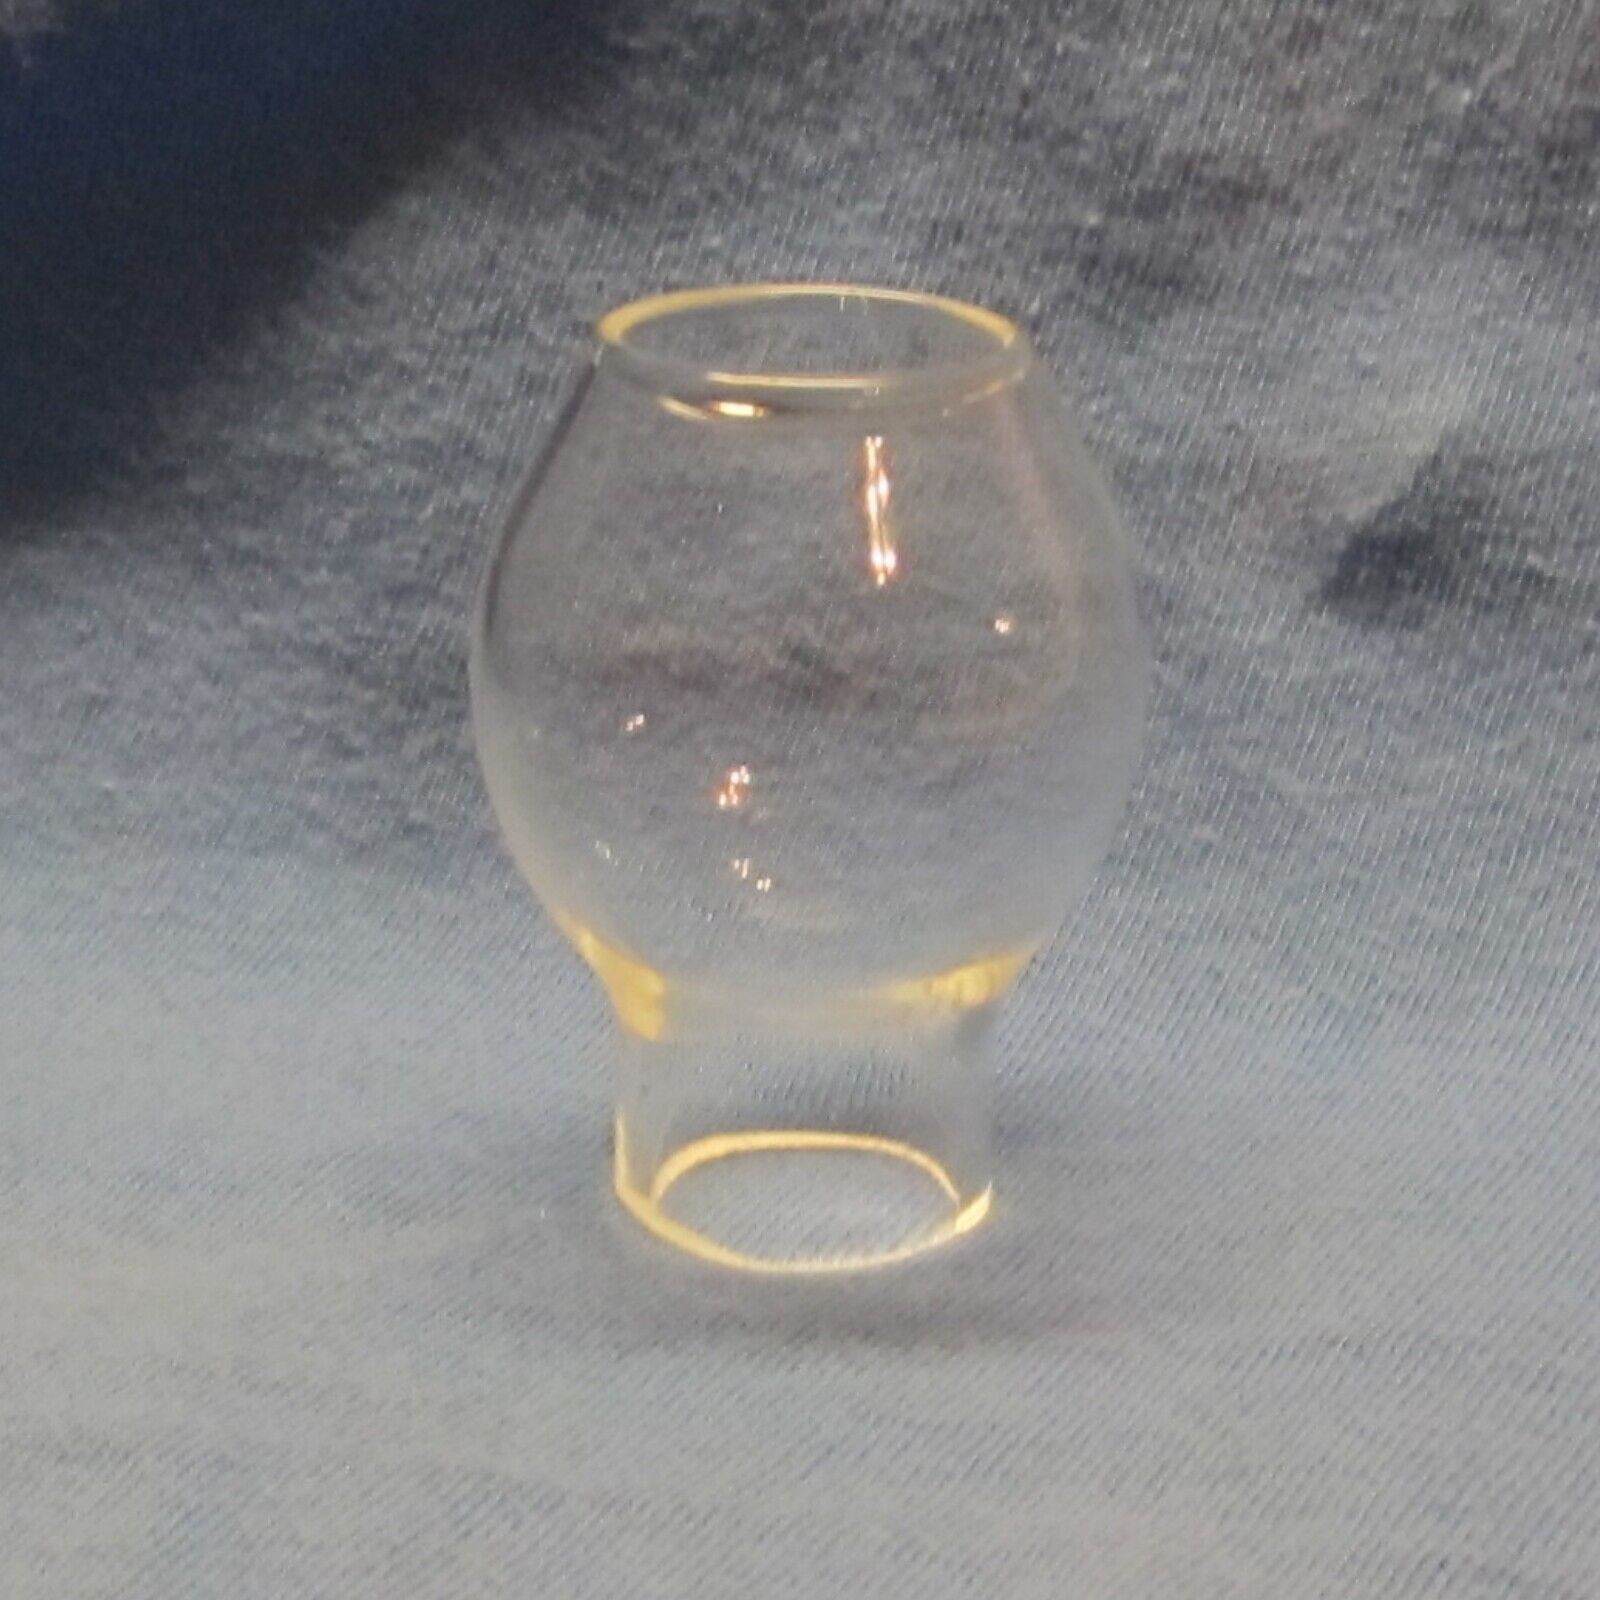  Glass CRESOLENE VAPO oil lamp replacement mini Chimney